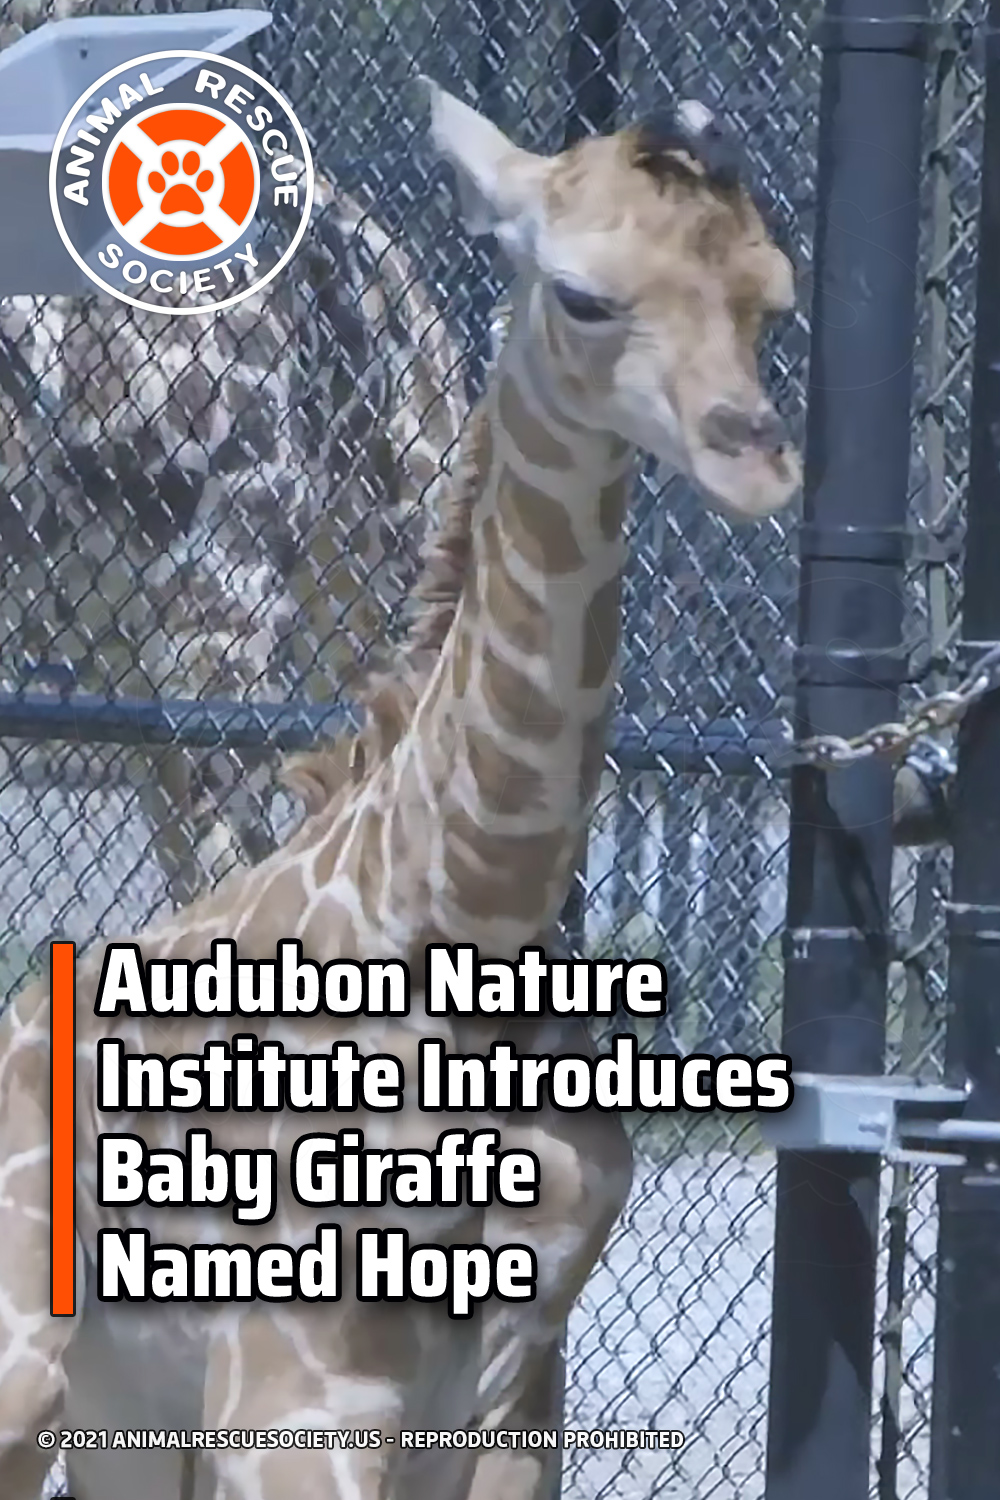 Audubon Nature Institute Introduces Baby Giraffe Named Hope